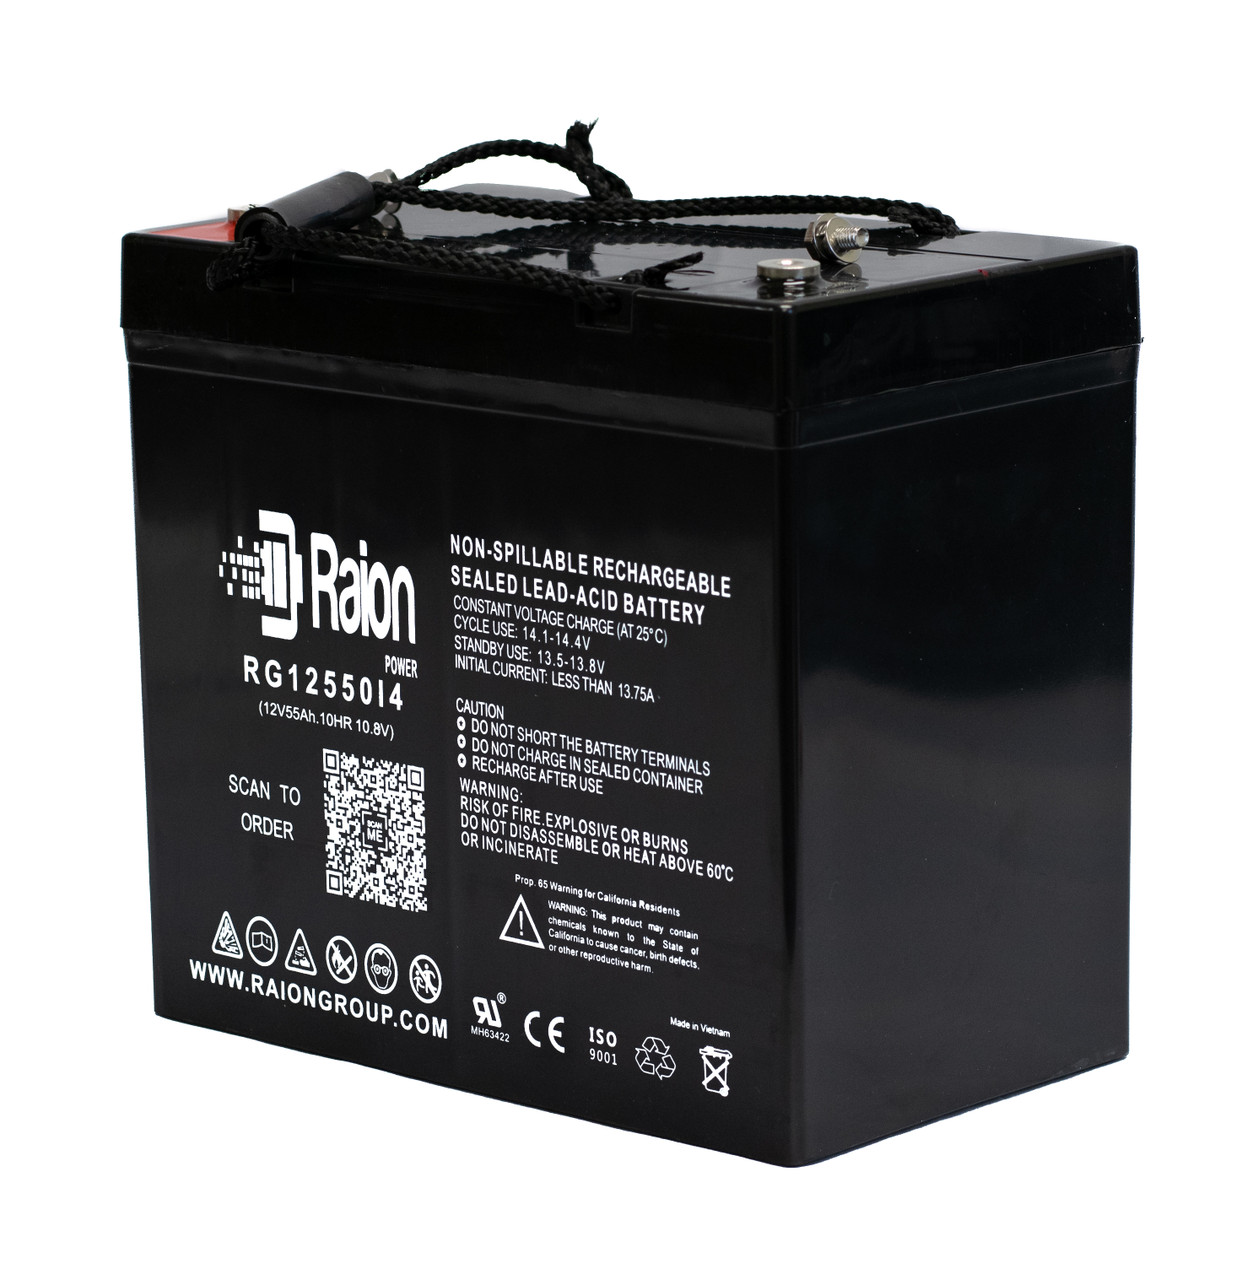 Raion Power Replacement 12V 55Ah Battery for Black Box BAT/BBB55 - 1 Pack